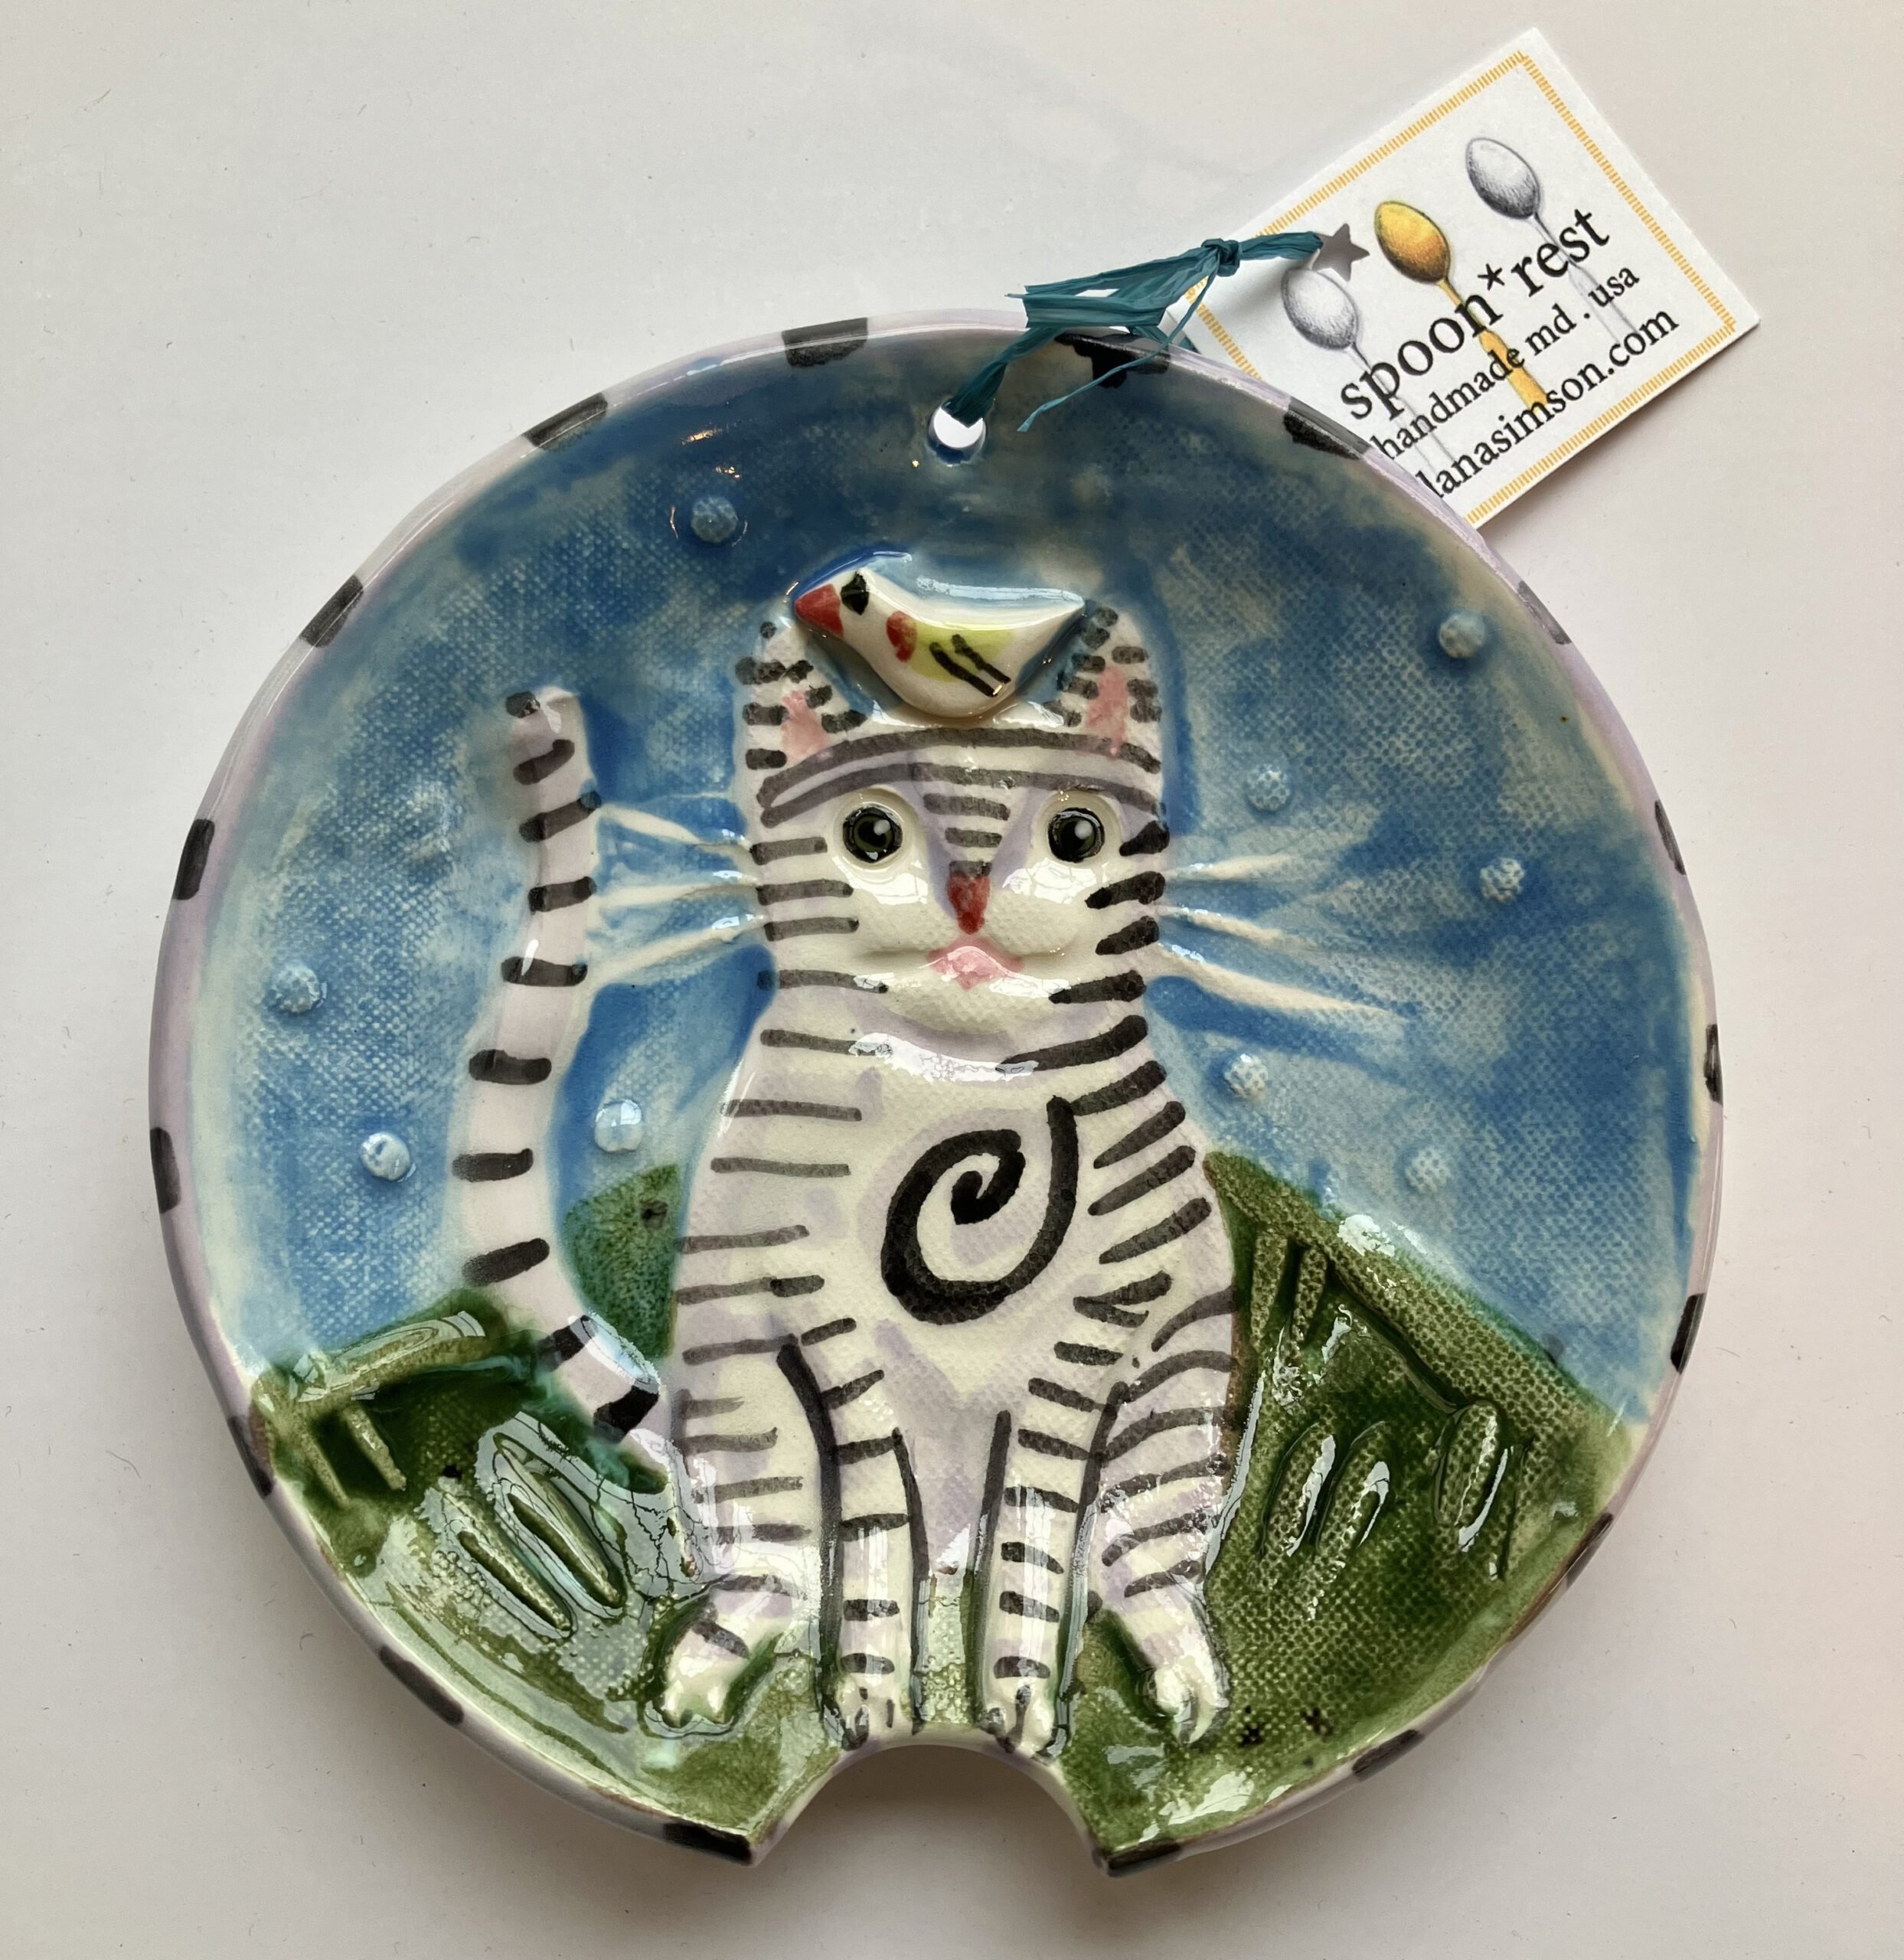 https://www.danasimson.com/wp-content/uploads/2017/08/cat-spoon-rest-ceramic-handmade-bird-kitchen-gift-dansimson-scaled.jpg